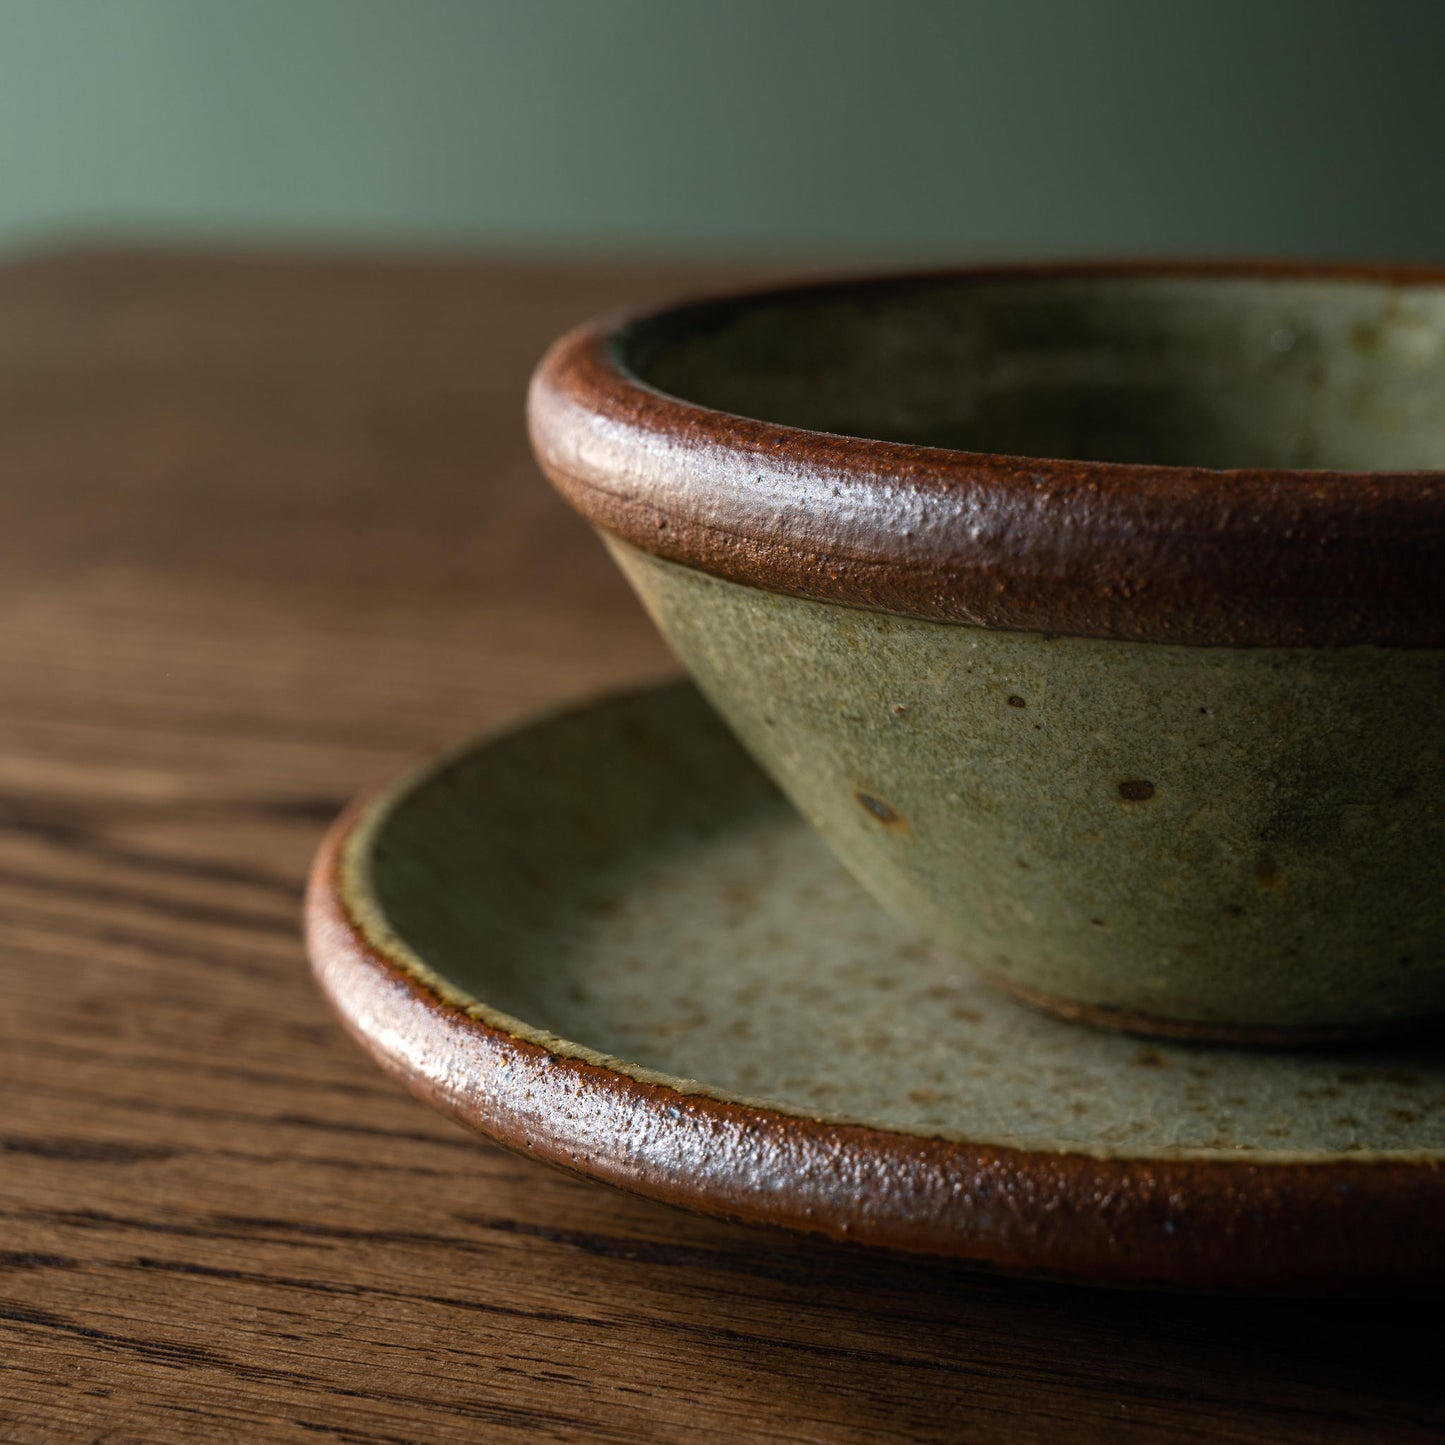 Leach Pottery Small Bowl